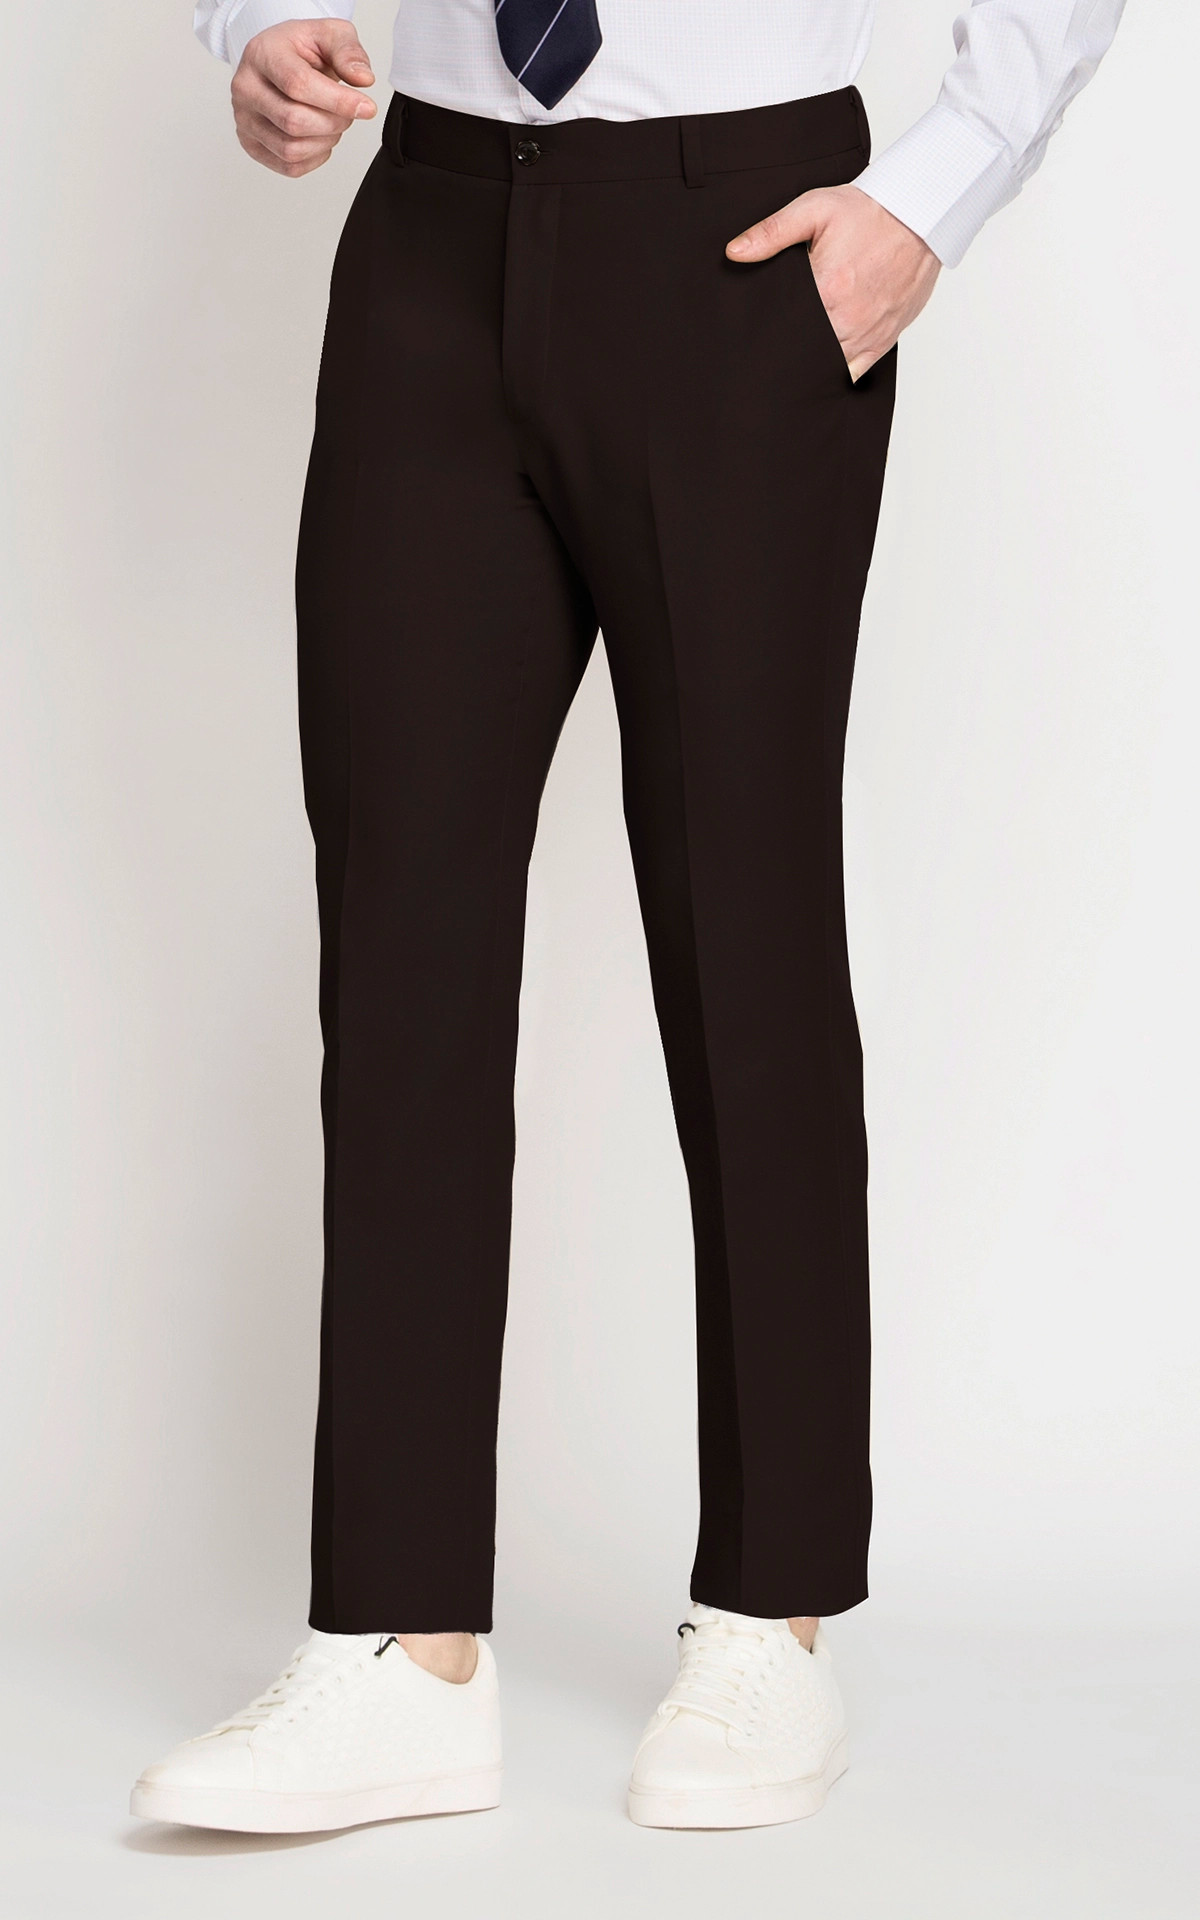 Van Heusen Cotton Pants for Men for sale | eBay